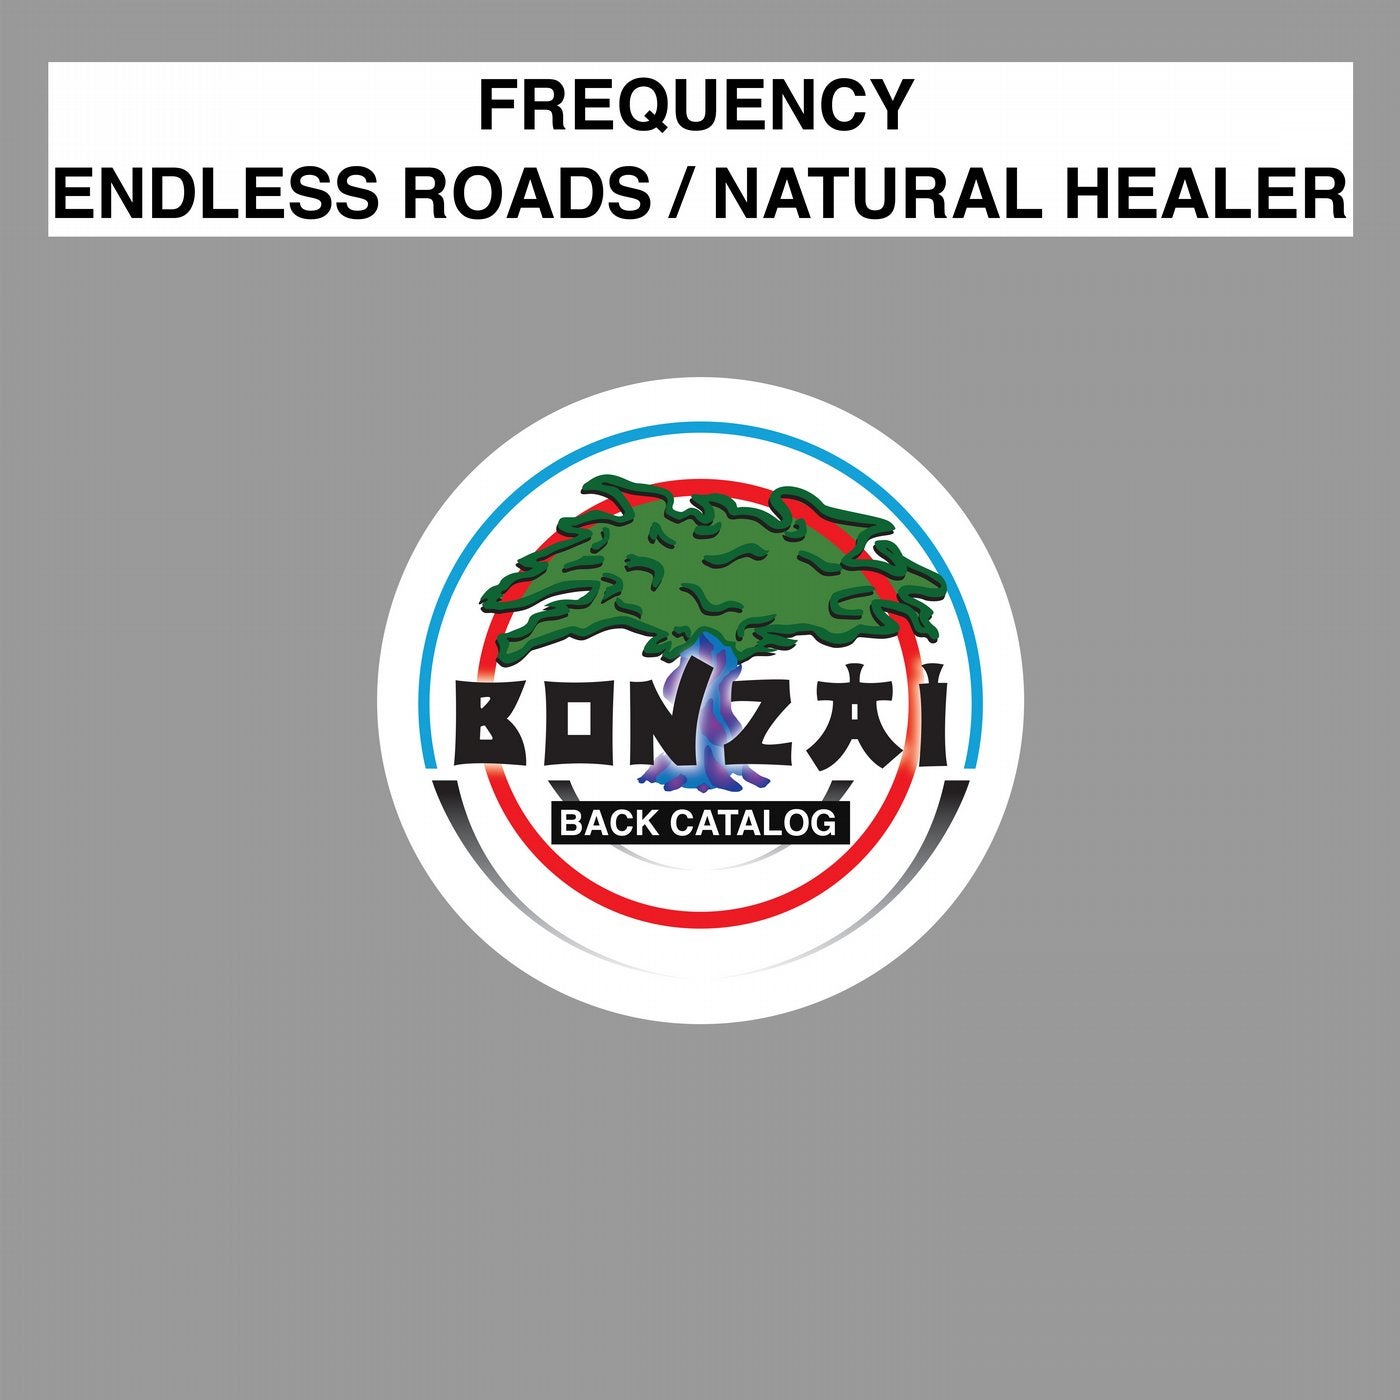 Endless Roads / Natural Healer